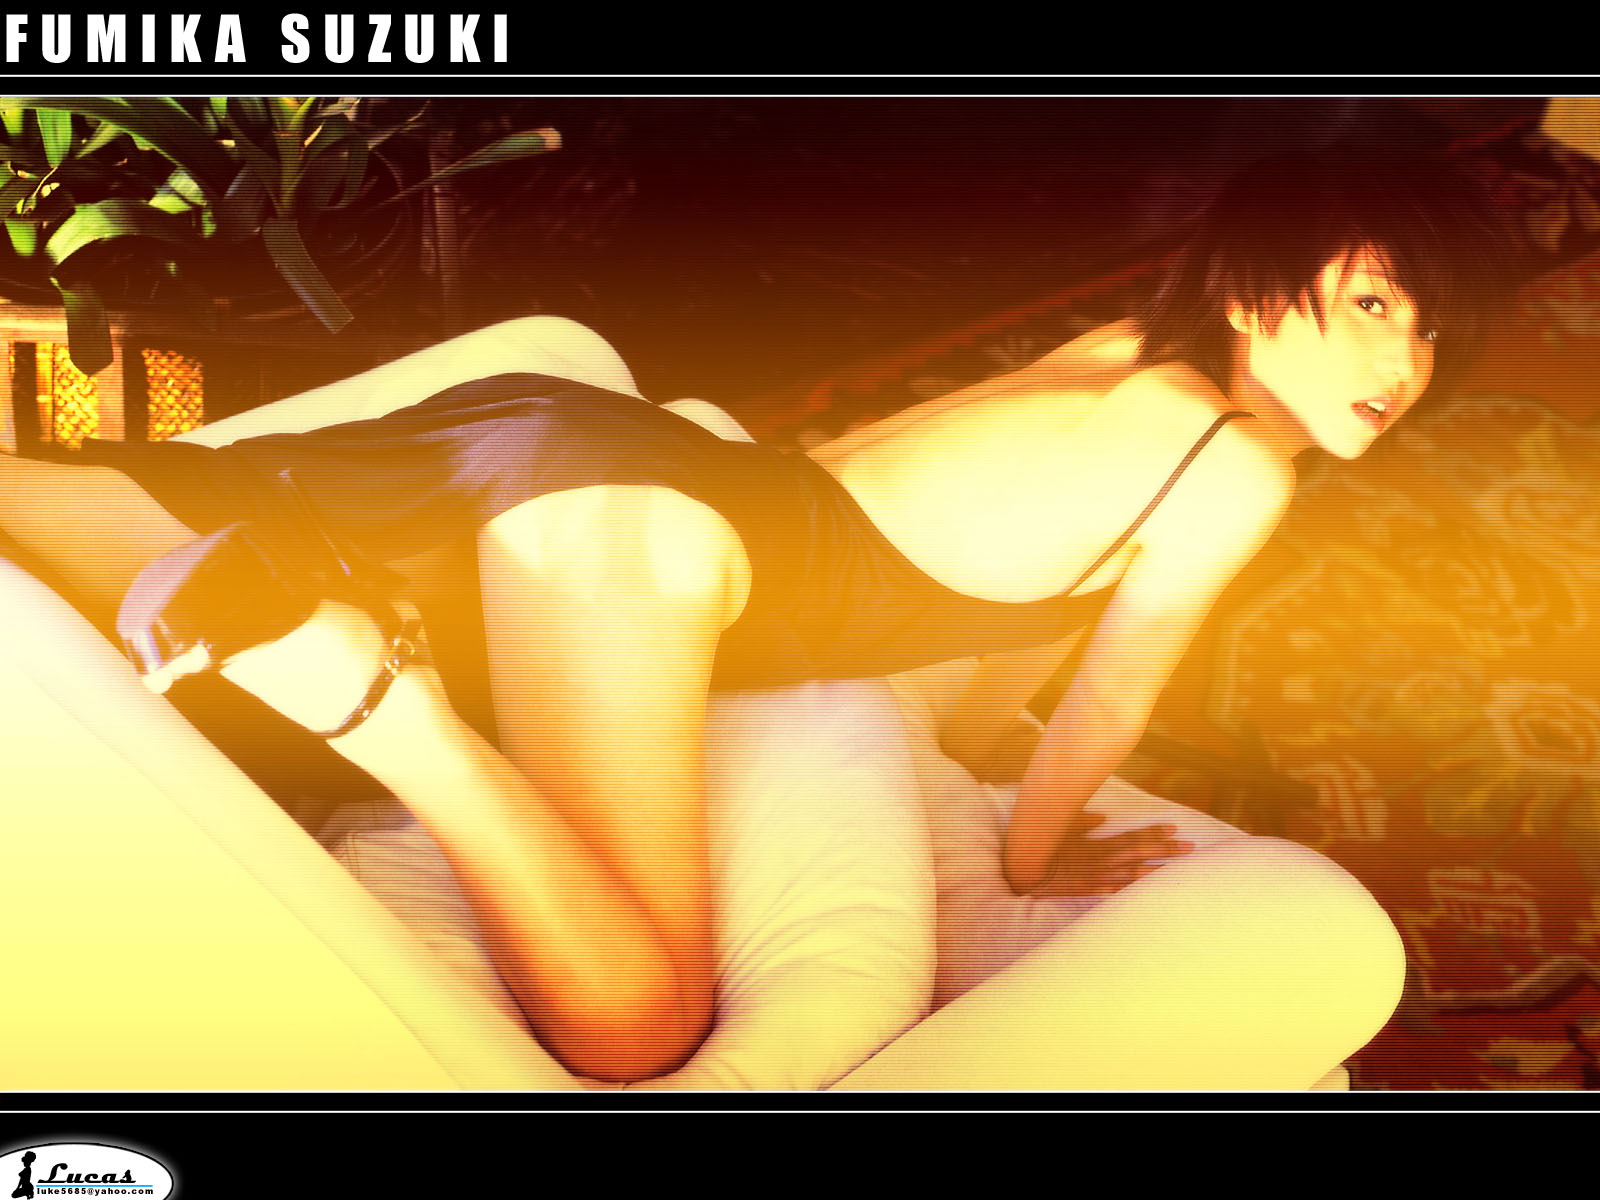 Download High quality Fumika Suzuki wallpaper / Celebrities Female / 1600x1200